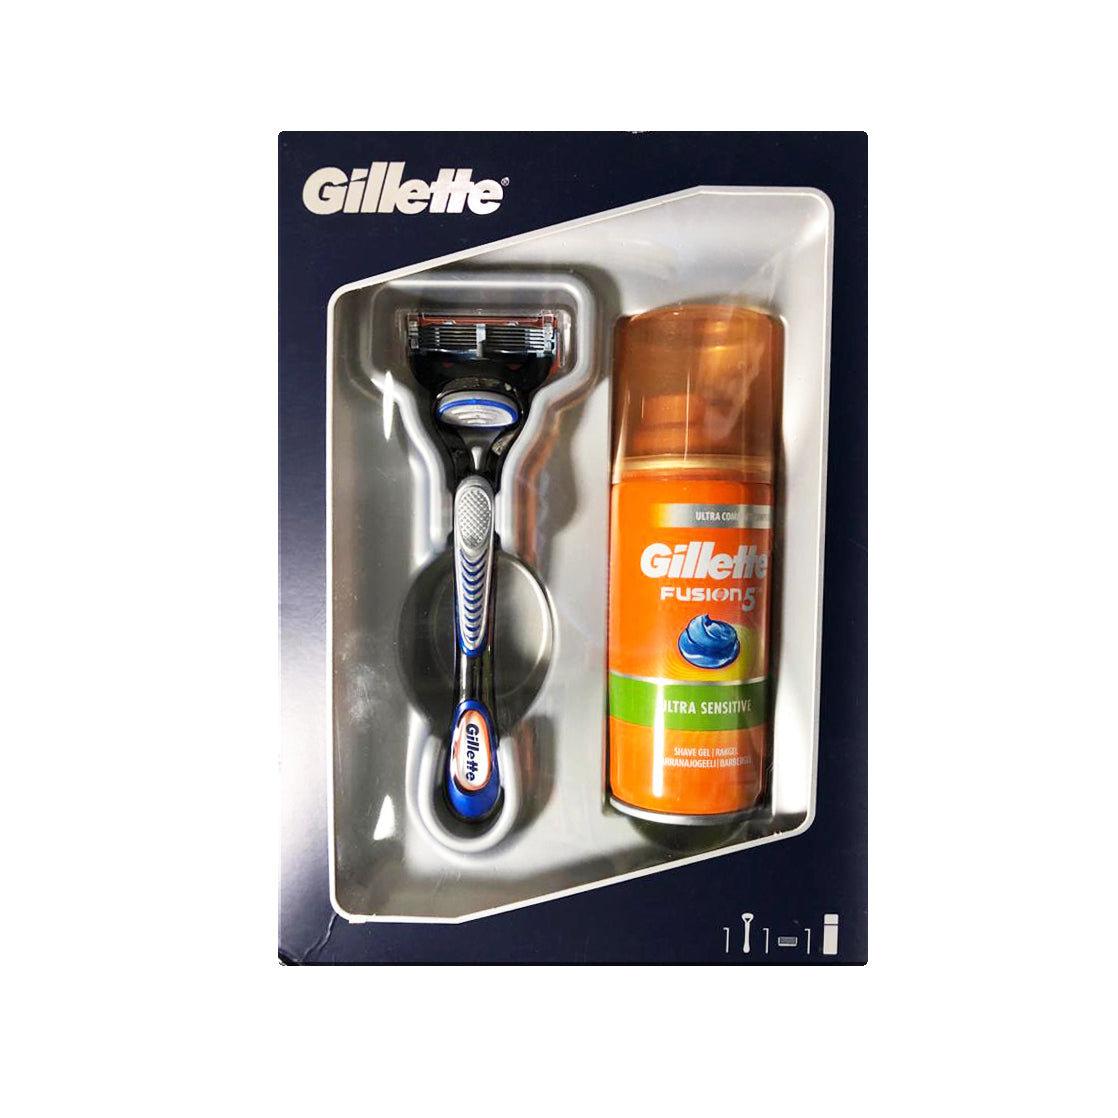 Gillette Fusion 5 Shaving Gift Set